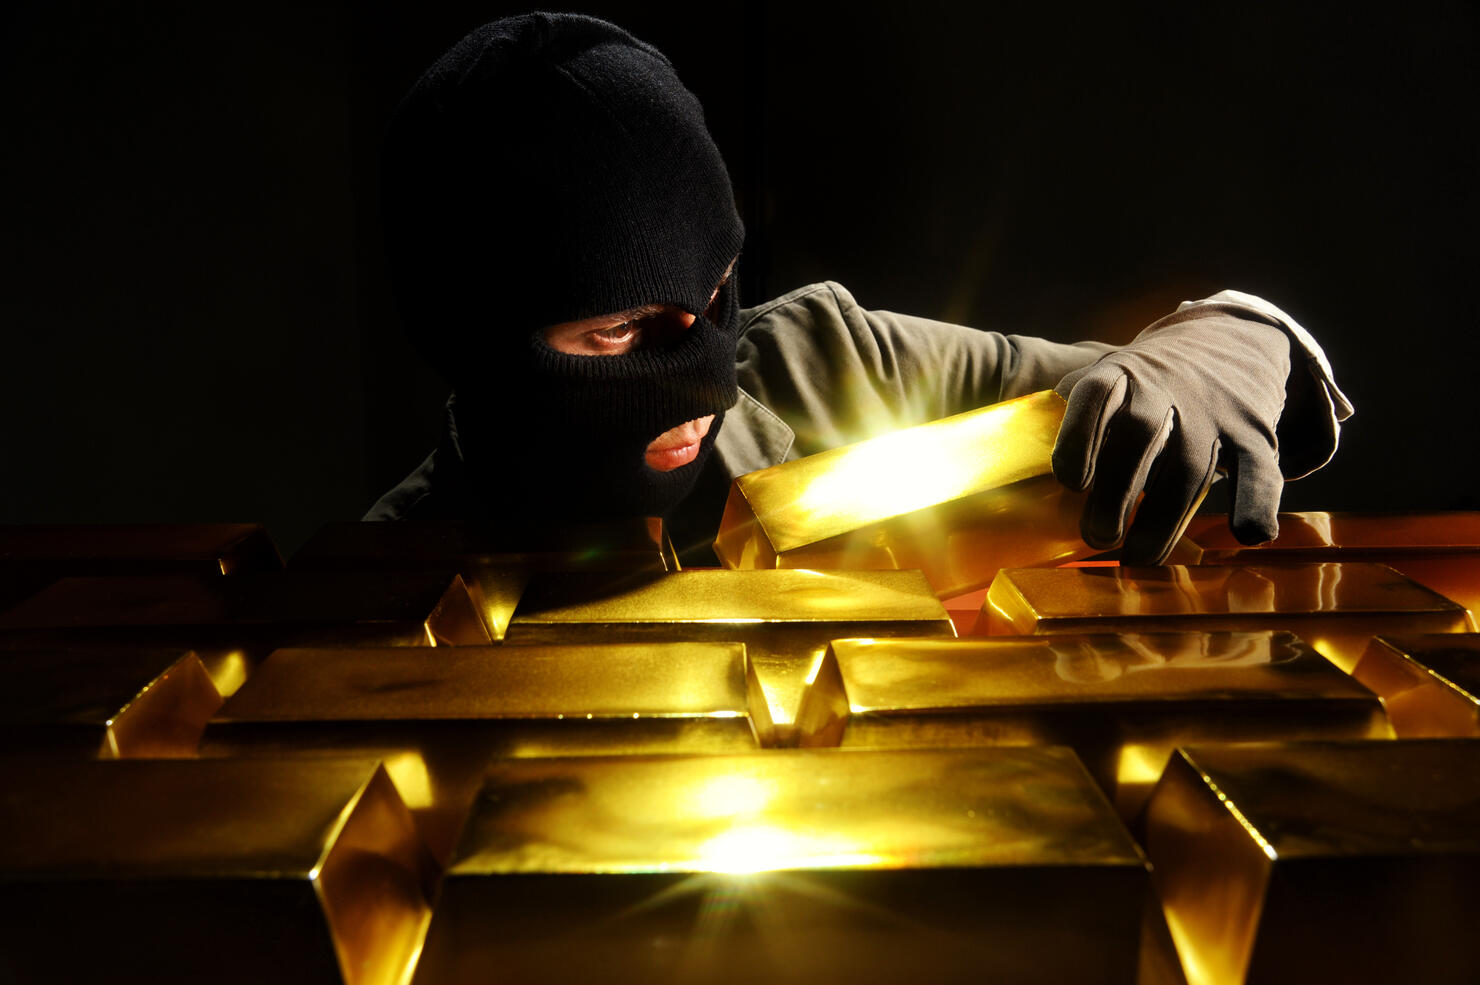 Thief stealing gold bars